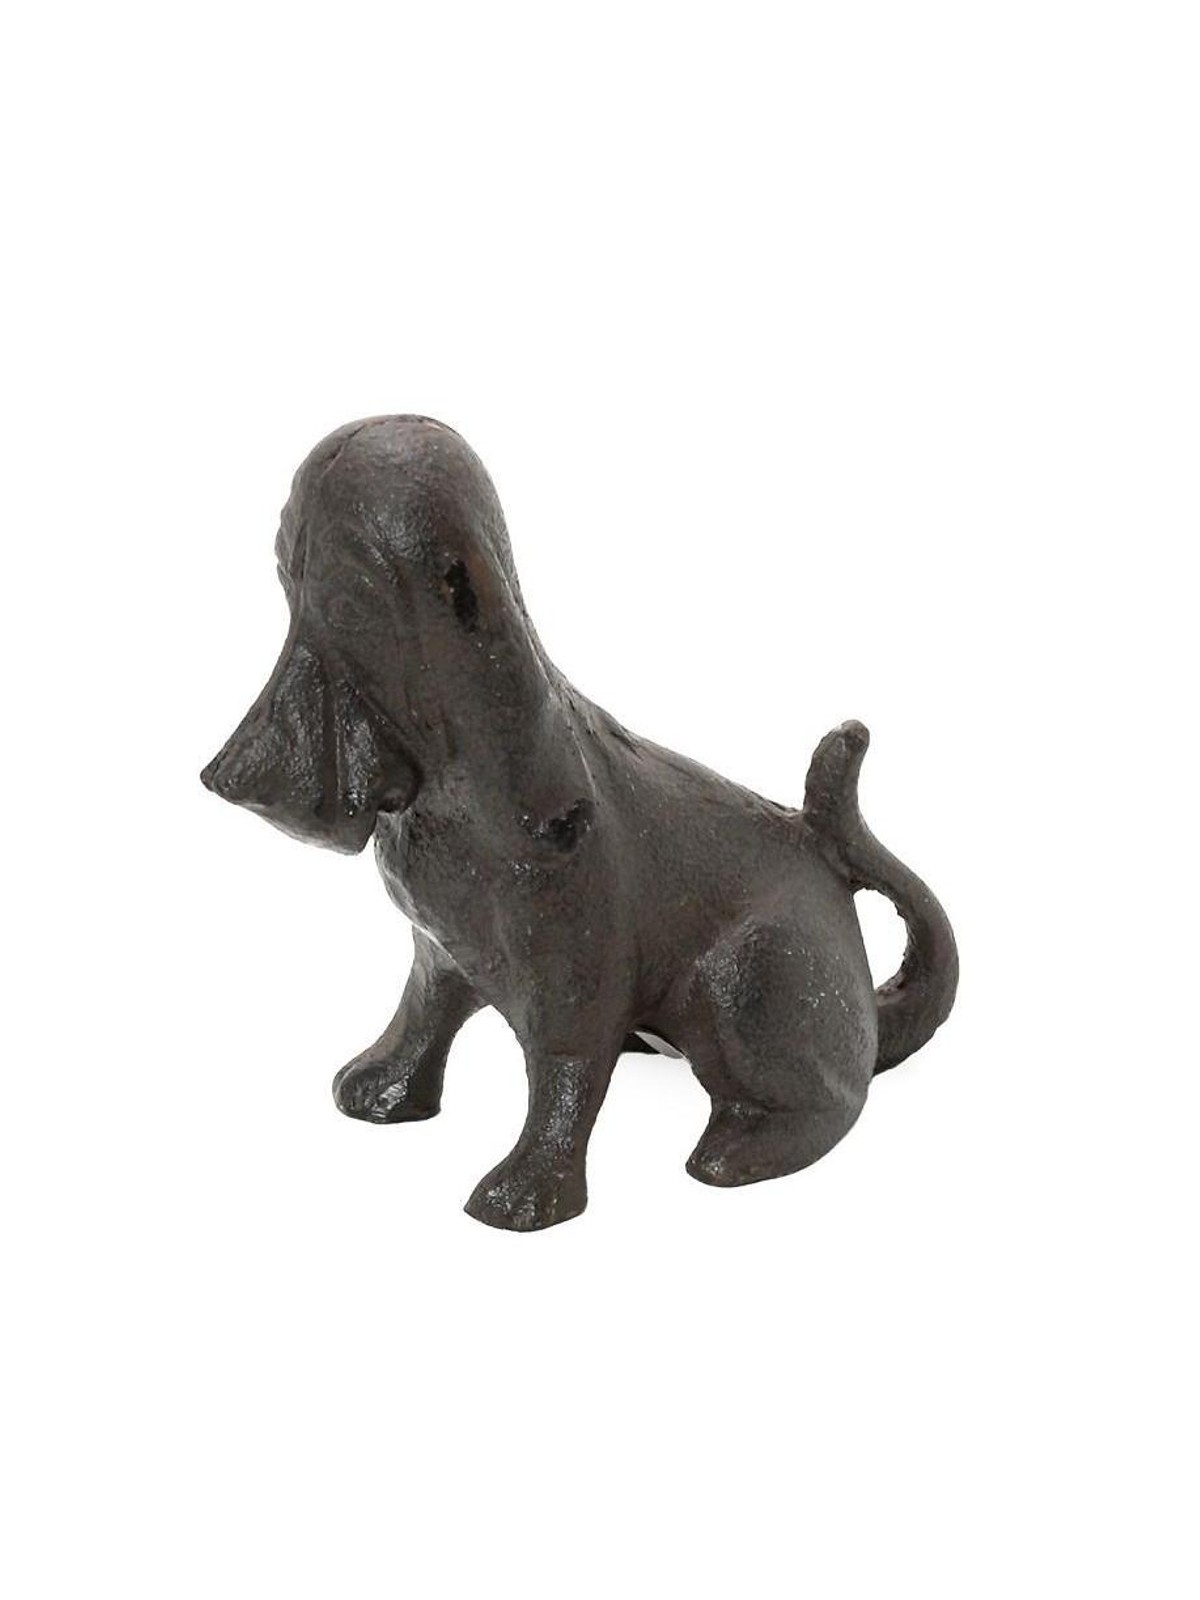 Cast iron dog figure